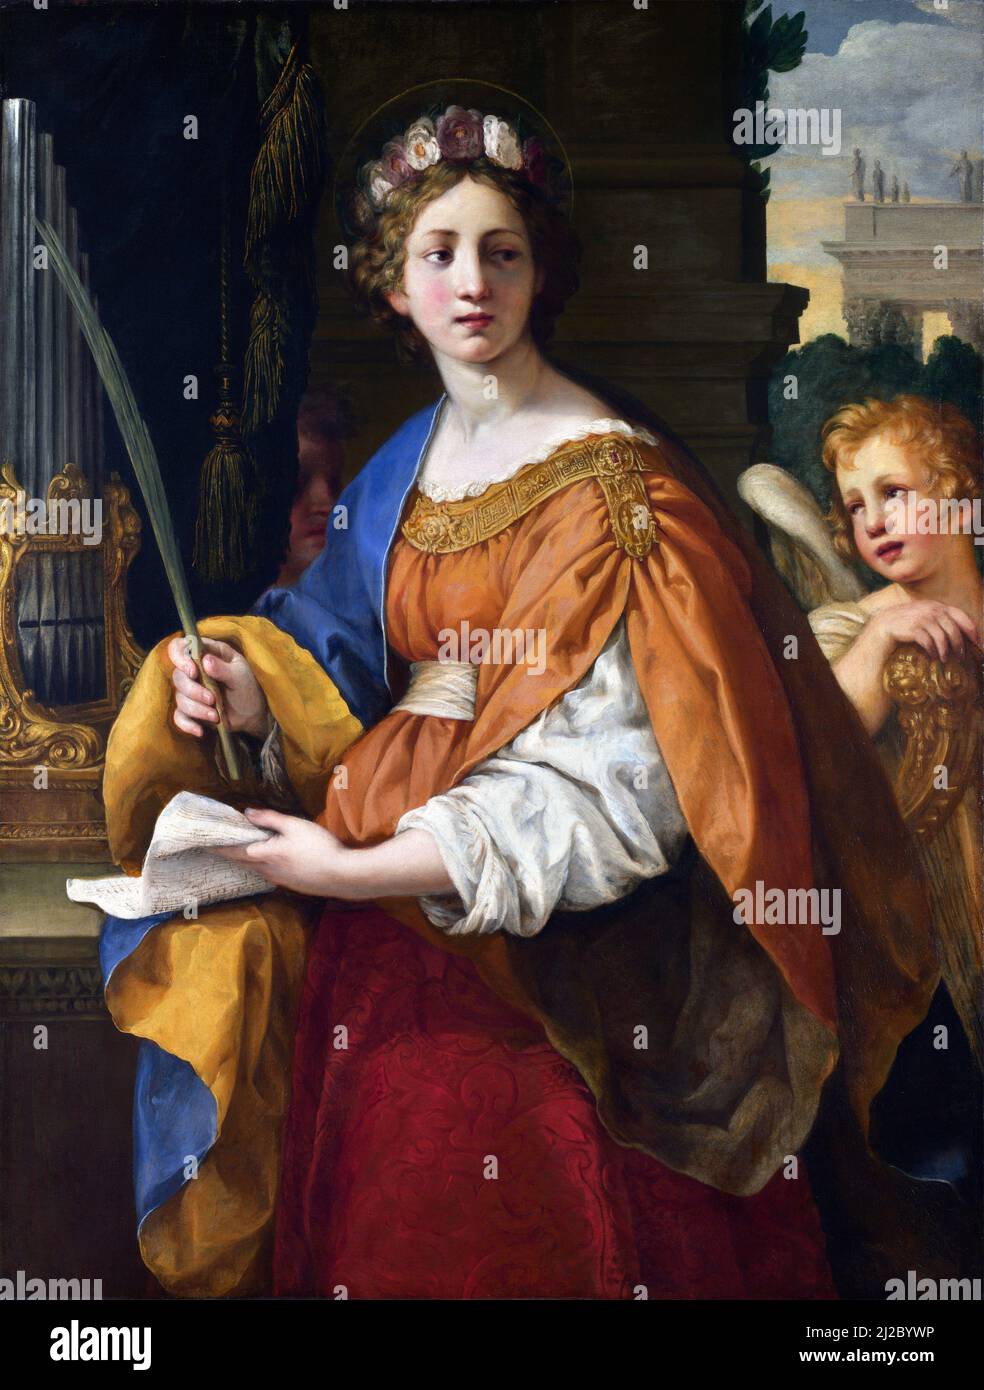 Saint Cecilia von Pietro da Cortona ( Pietro Berrettini: 1596/7-1669), Öl auf Leinwand, c. 1620-25 Stockfoto